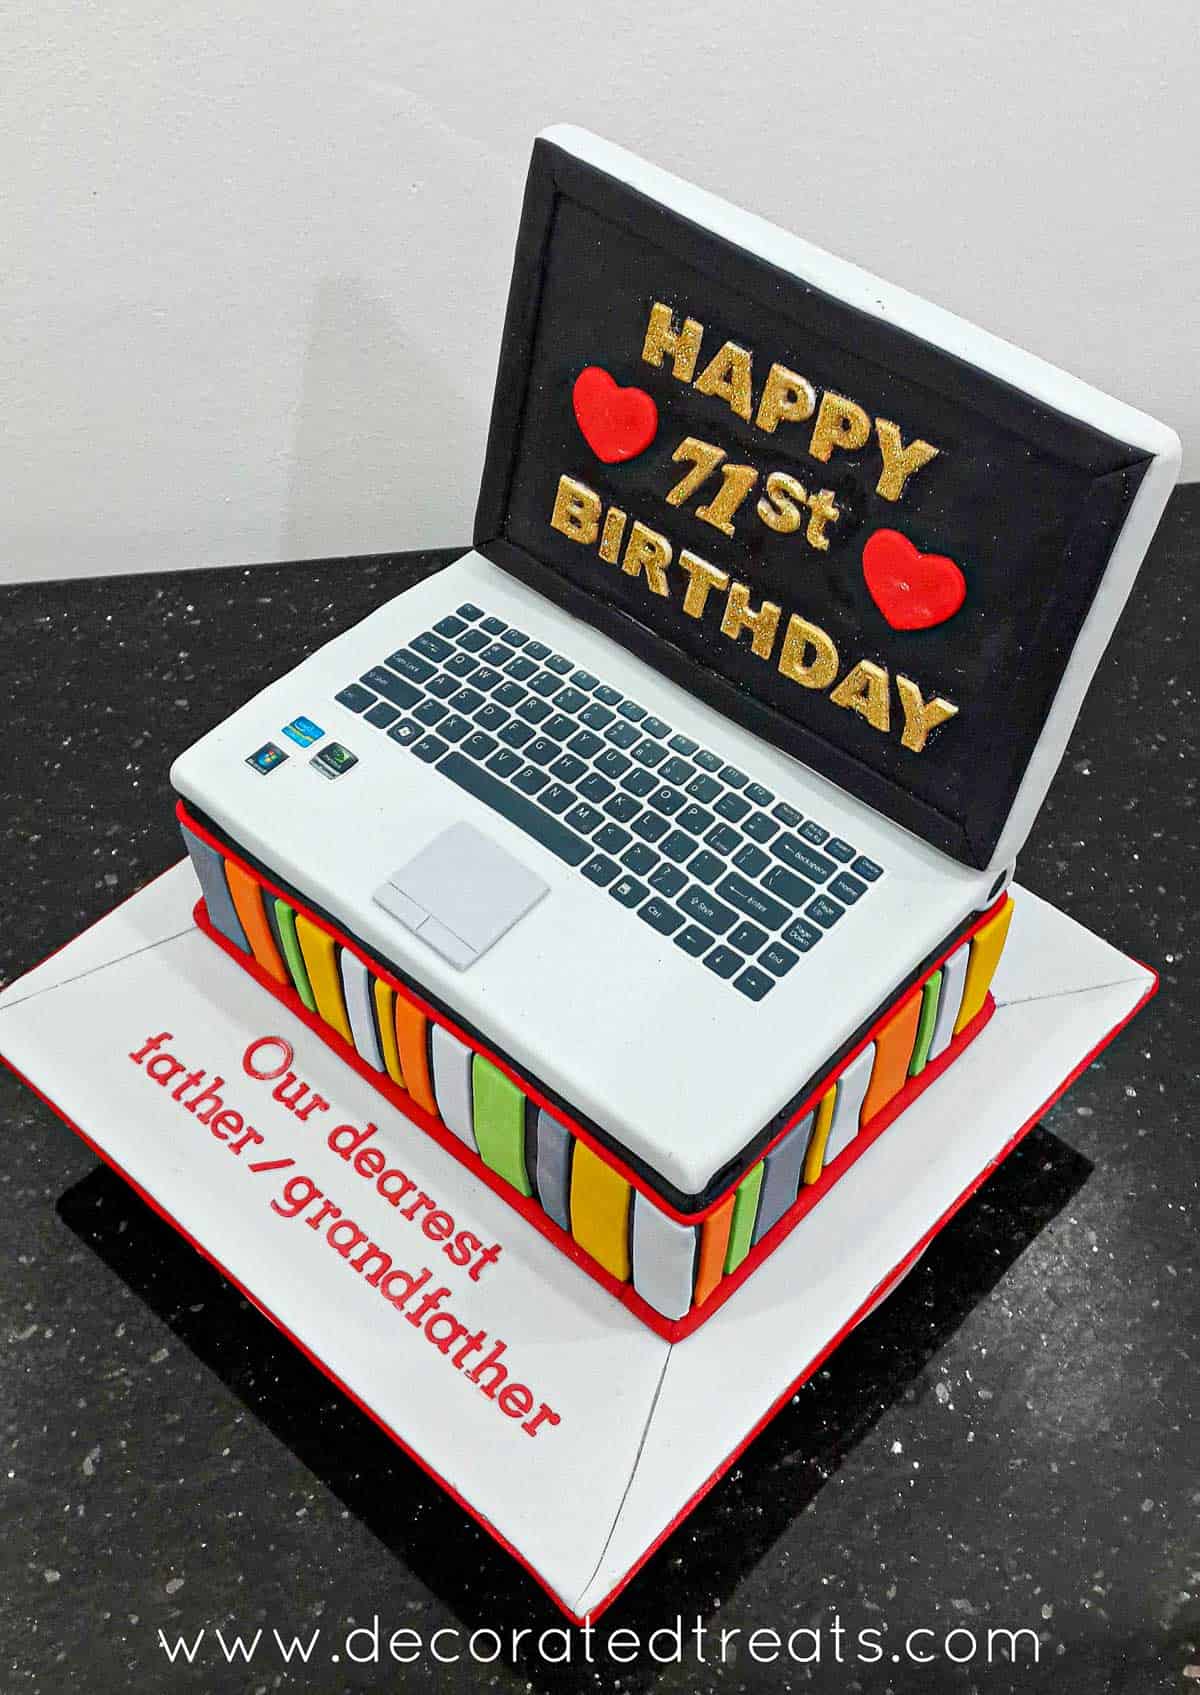 A laptop shaped cake